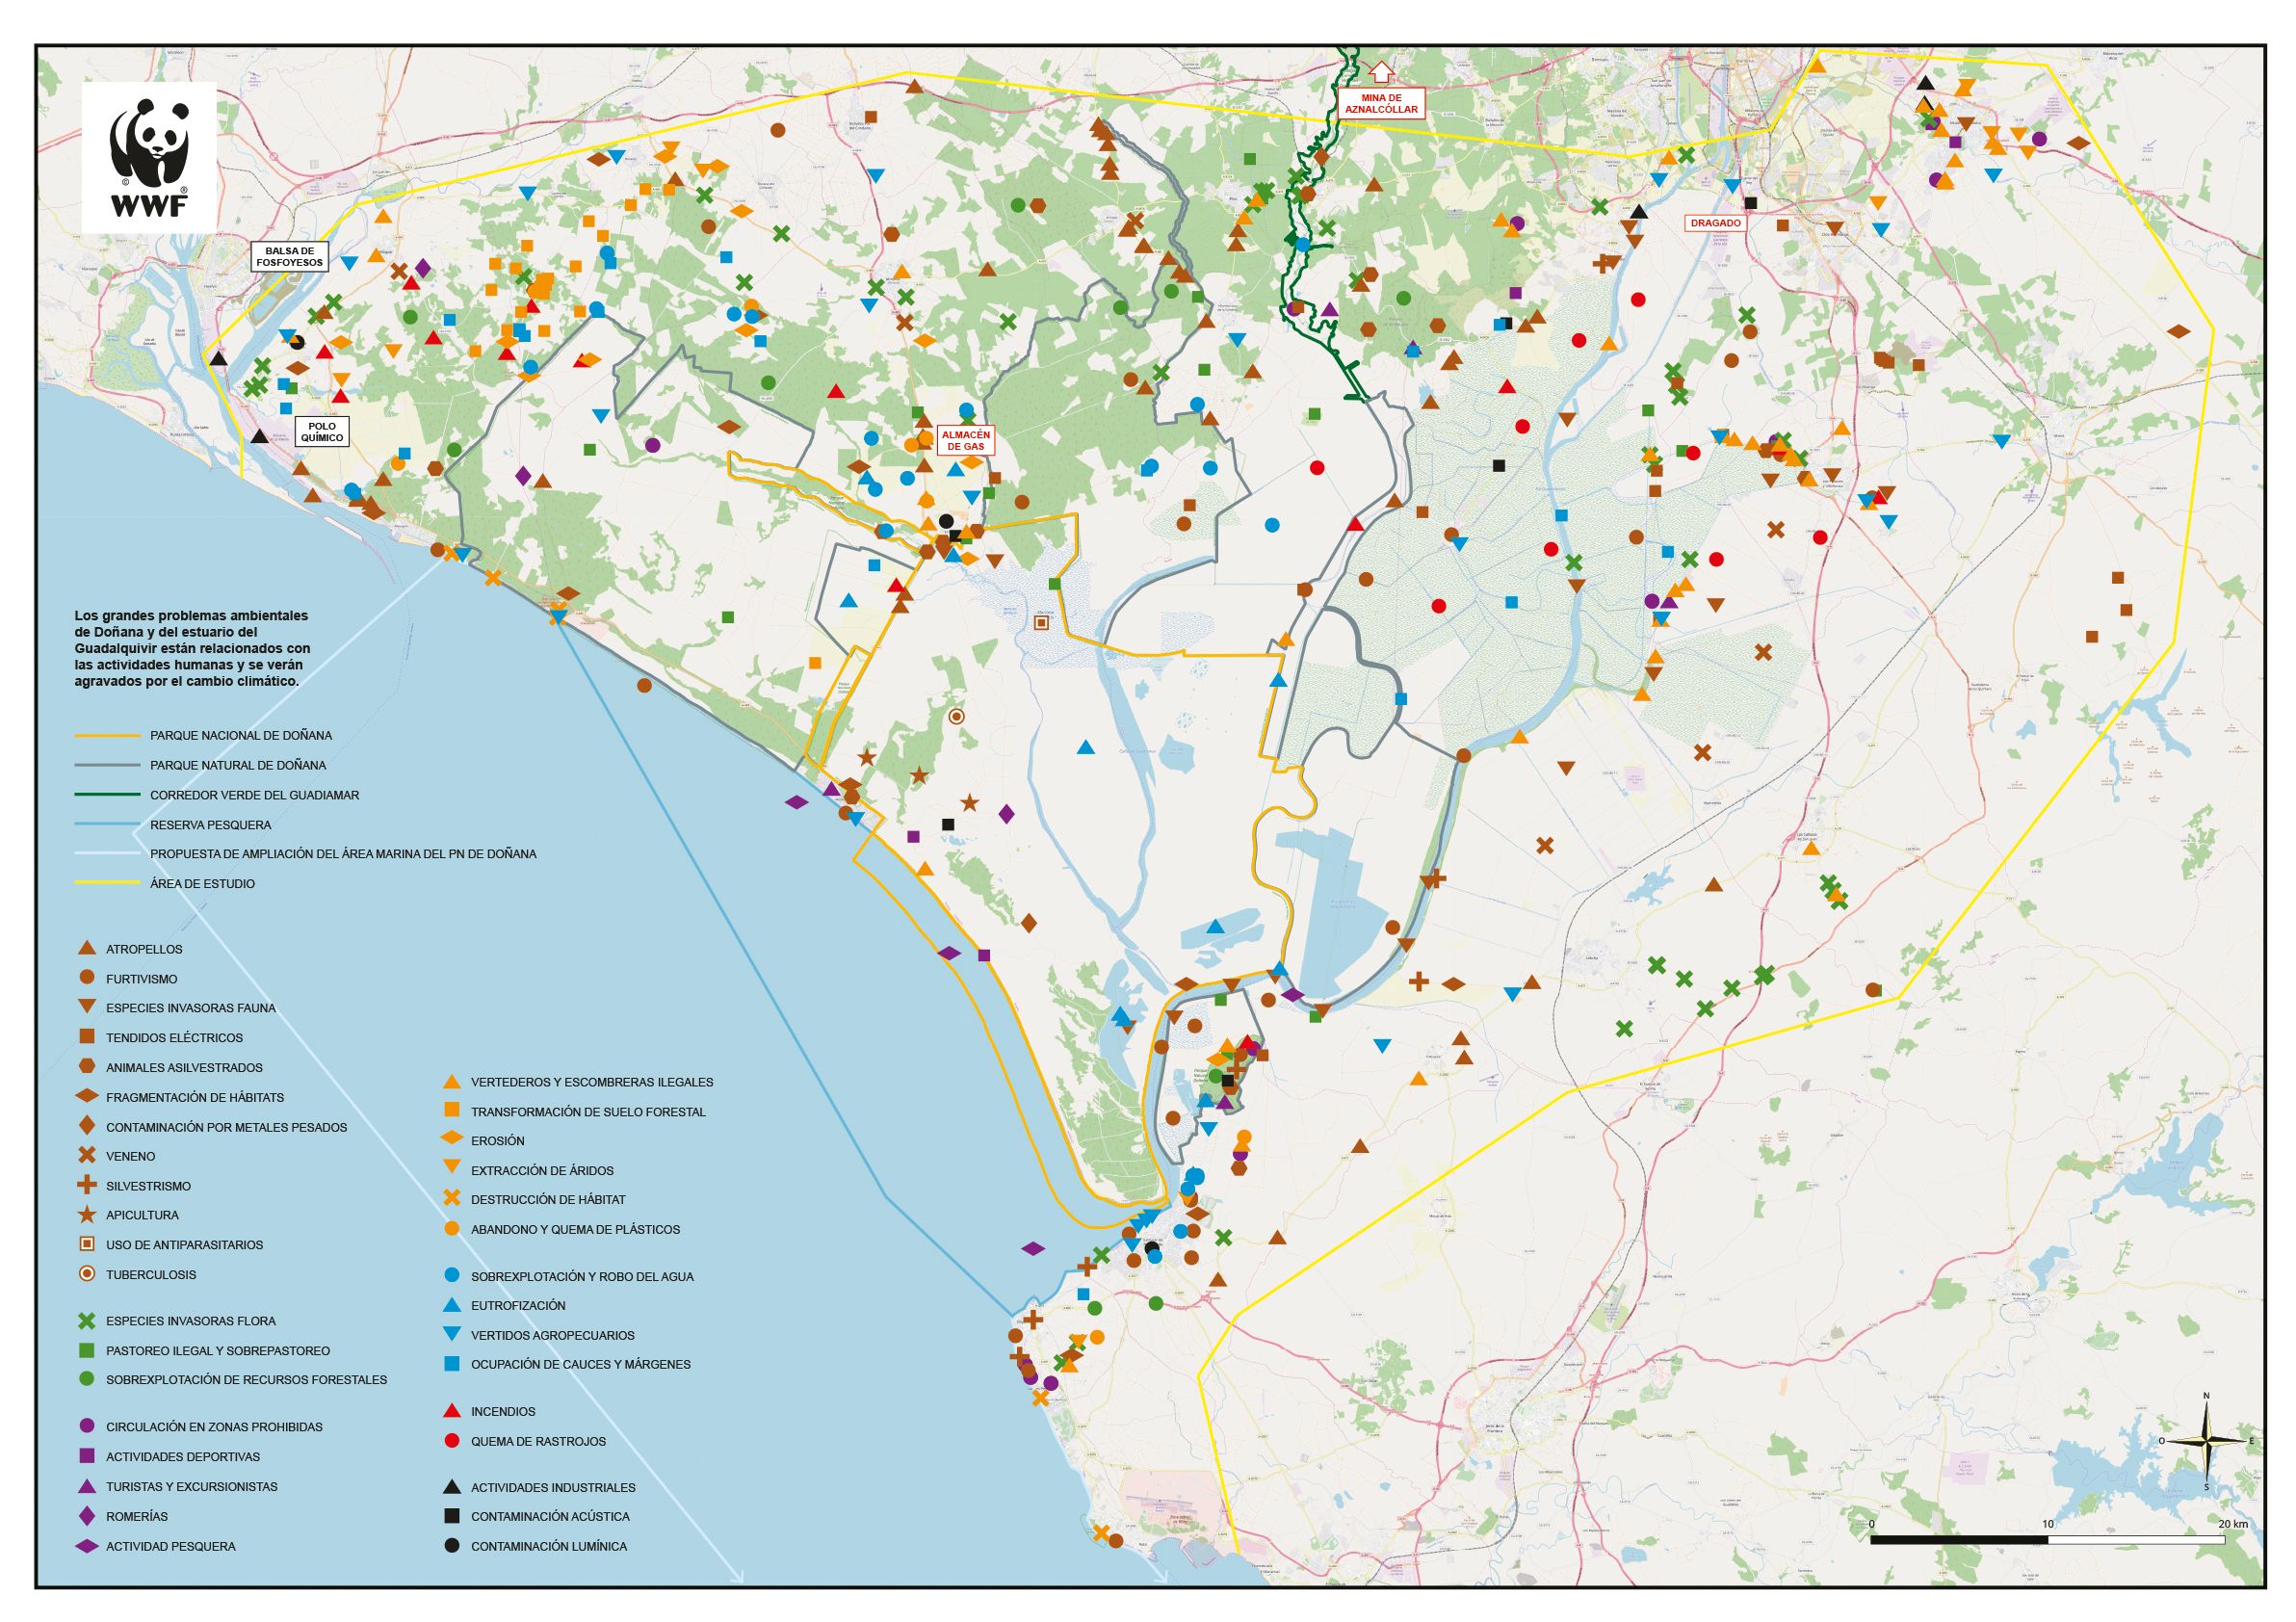 Mapa de impactos de Doñana, realizado por WWF